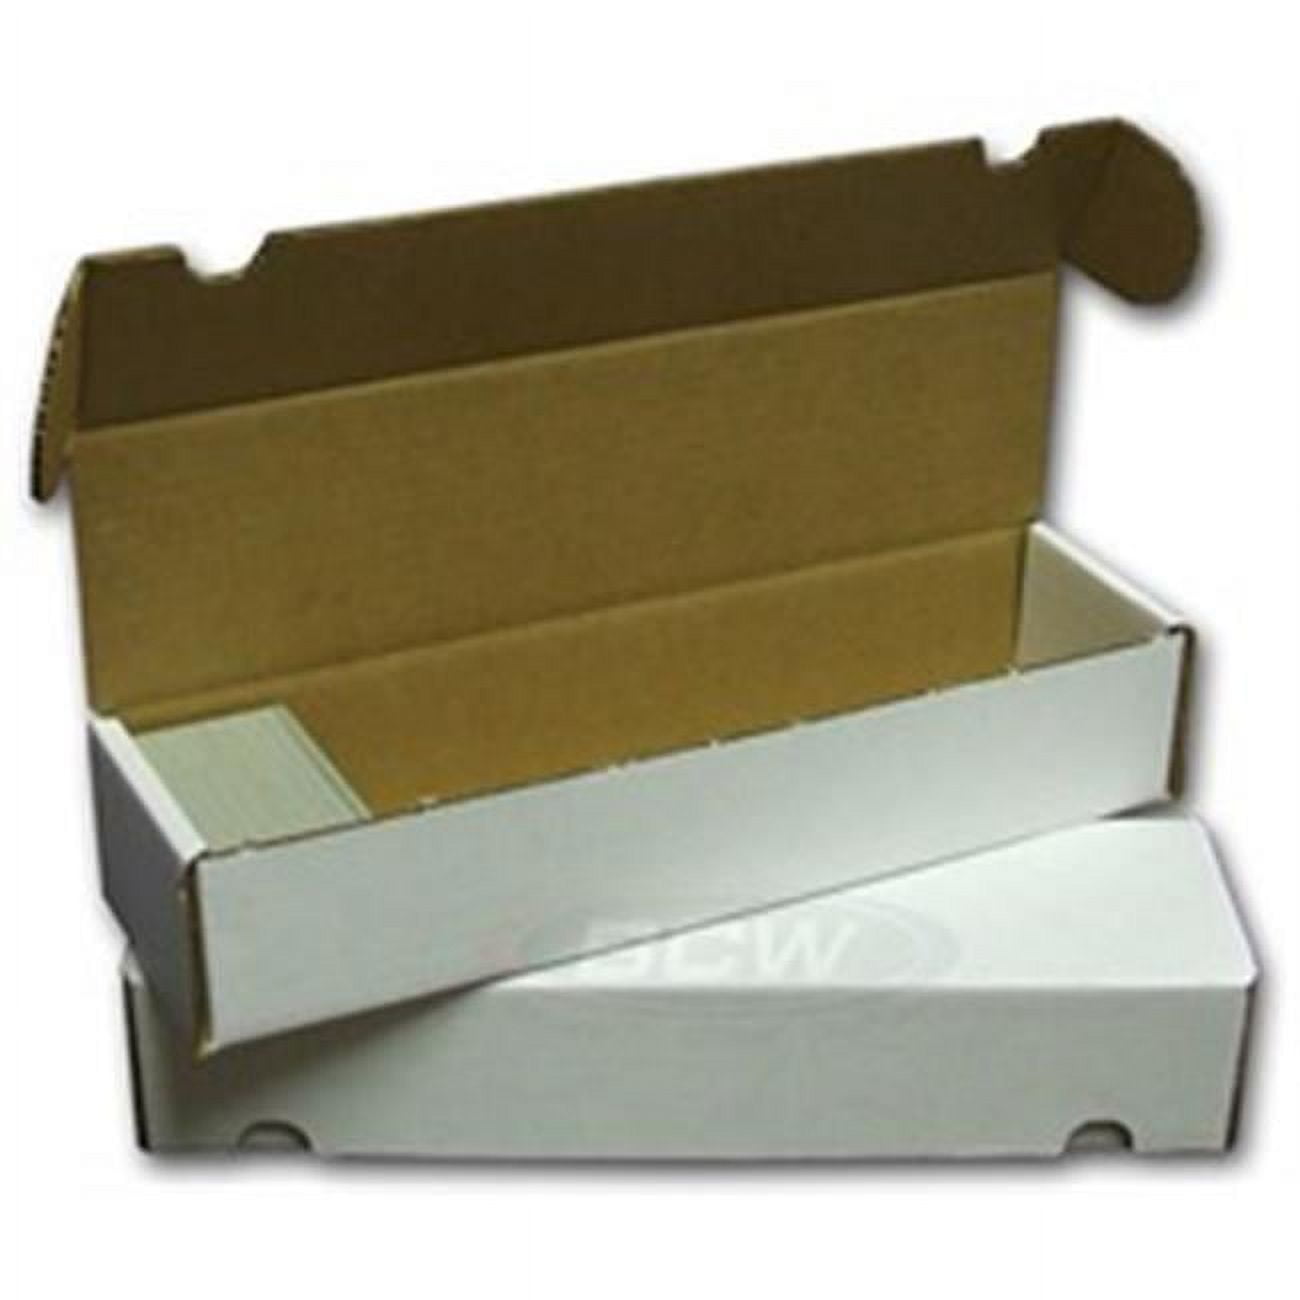 Simplify 64-Count Ornament Storage Box Organizer in Gold Printed Plastic 